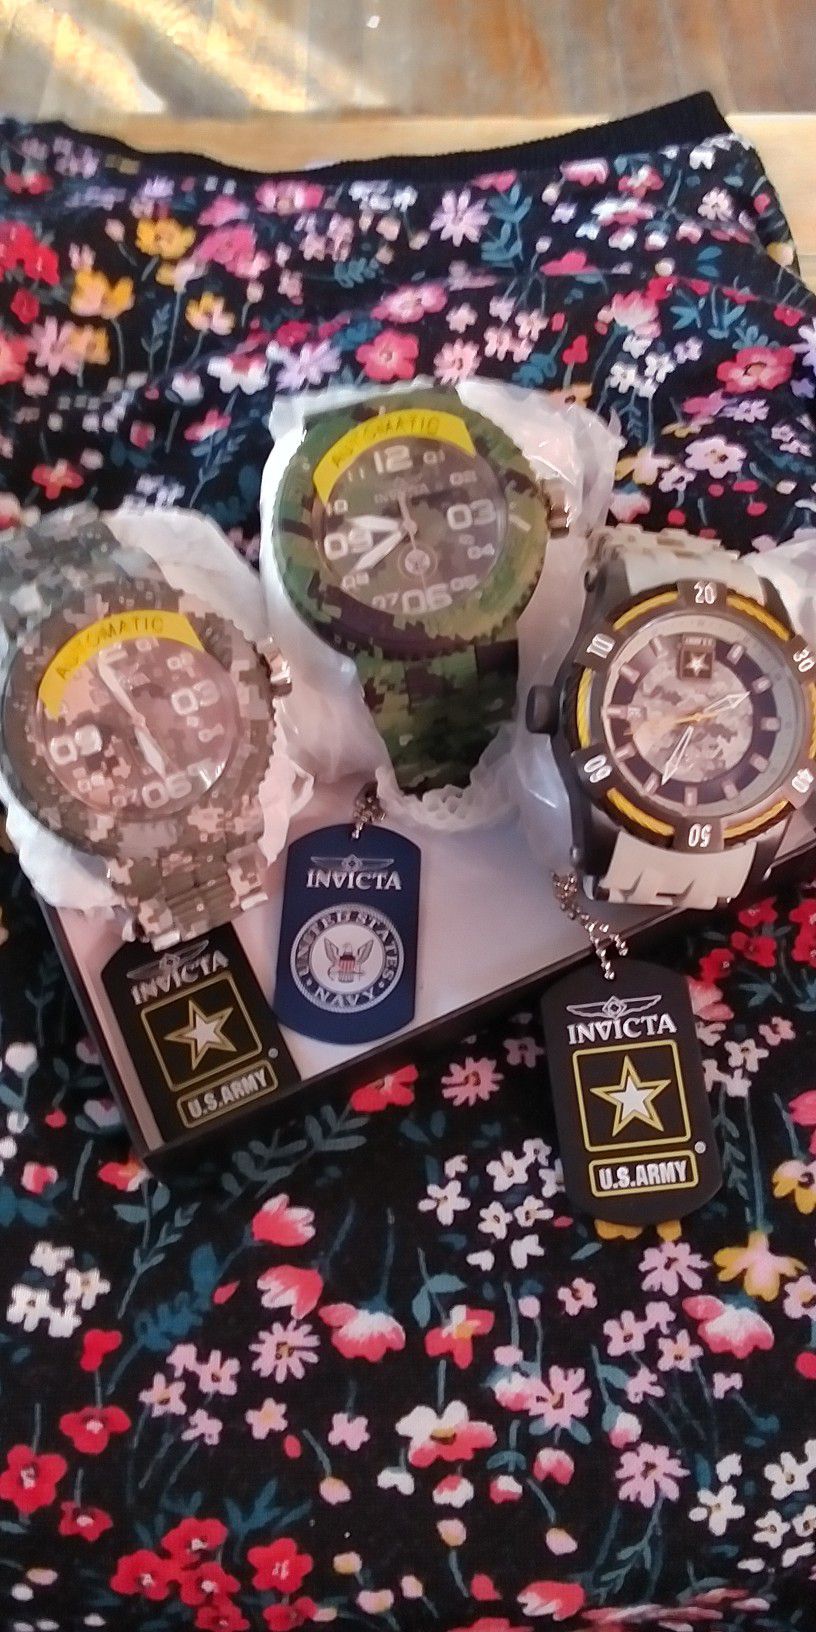 Military Edition Invicta watches!!